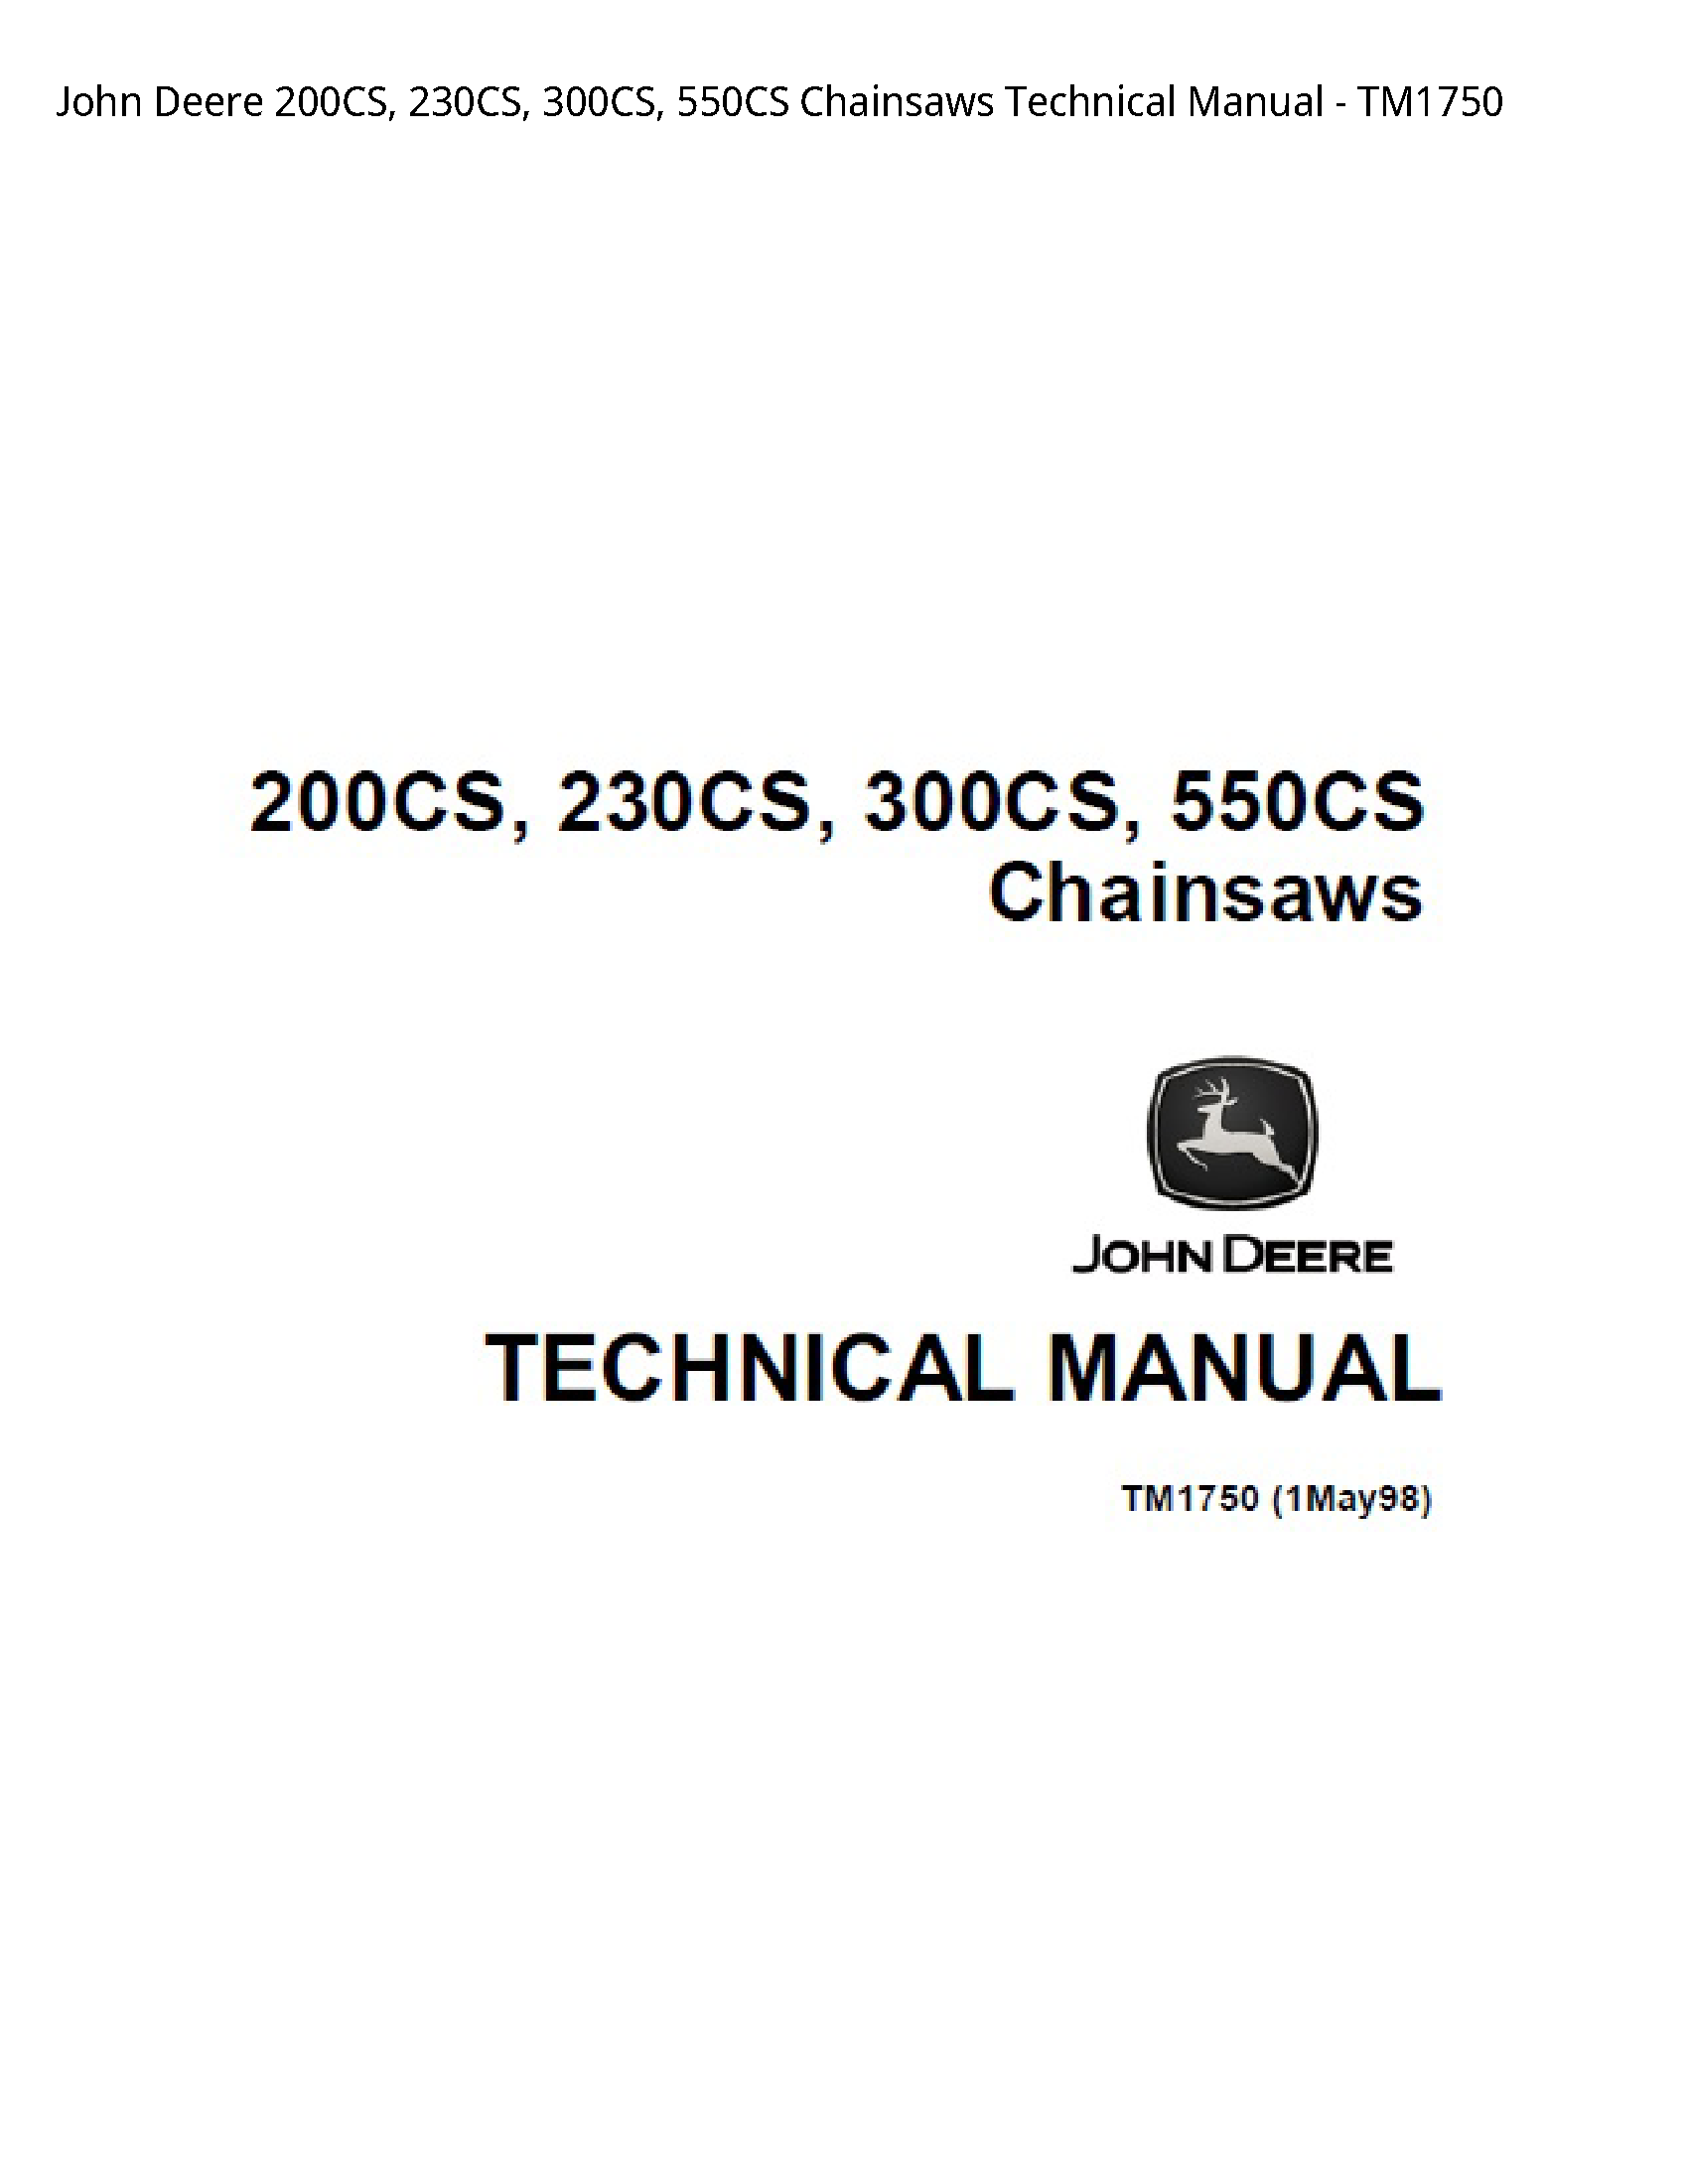 John Deere 200CS Chainsaws Technical manual